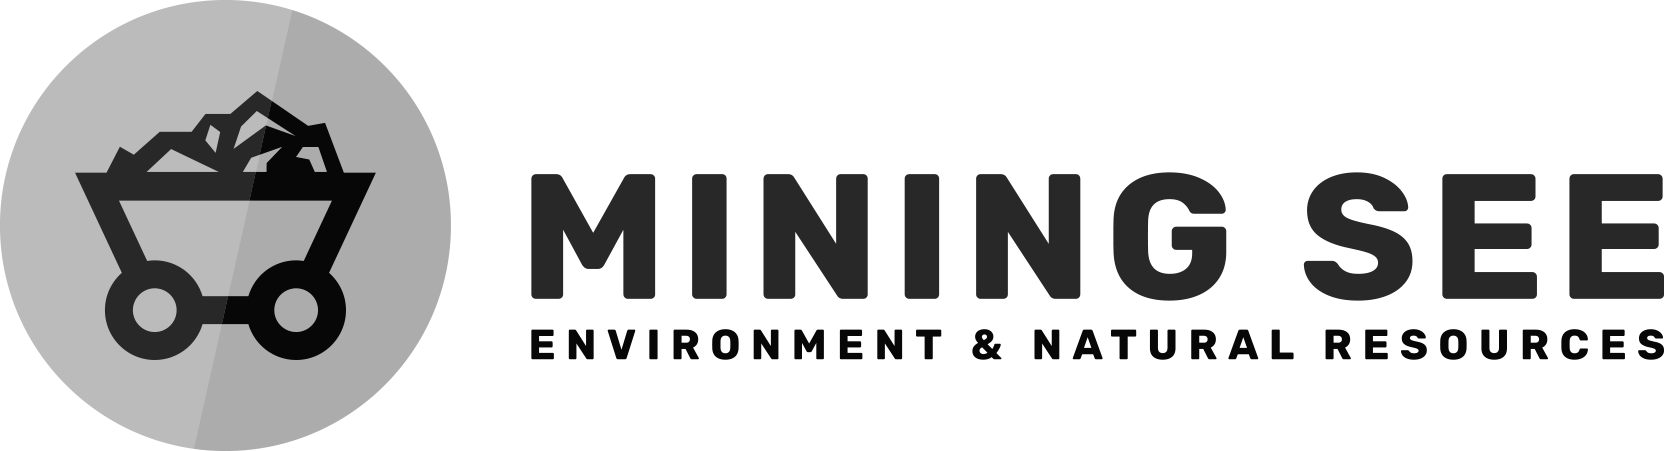 Mining SEE logo